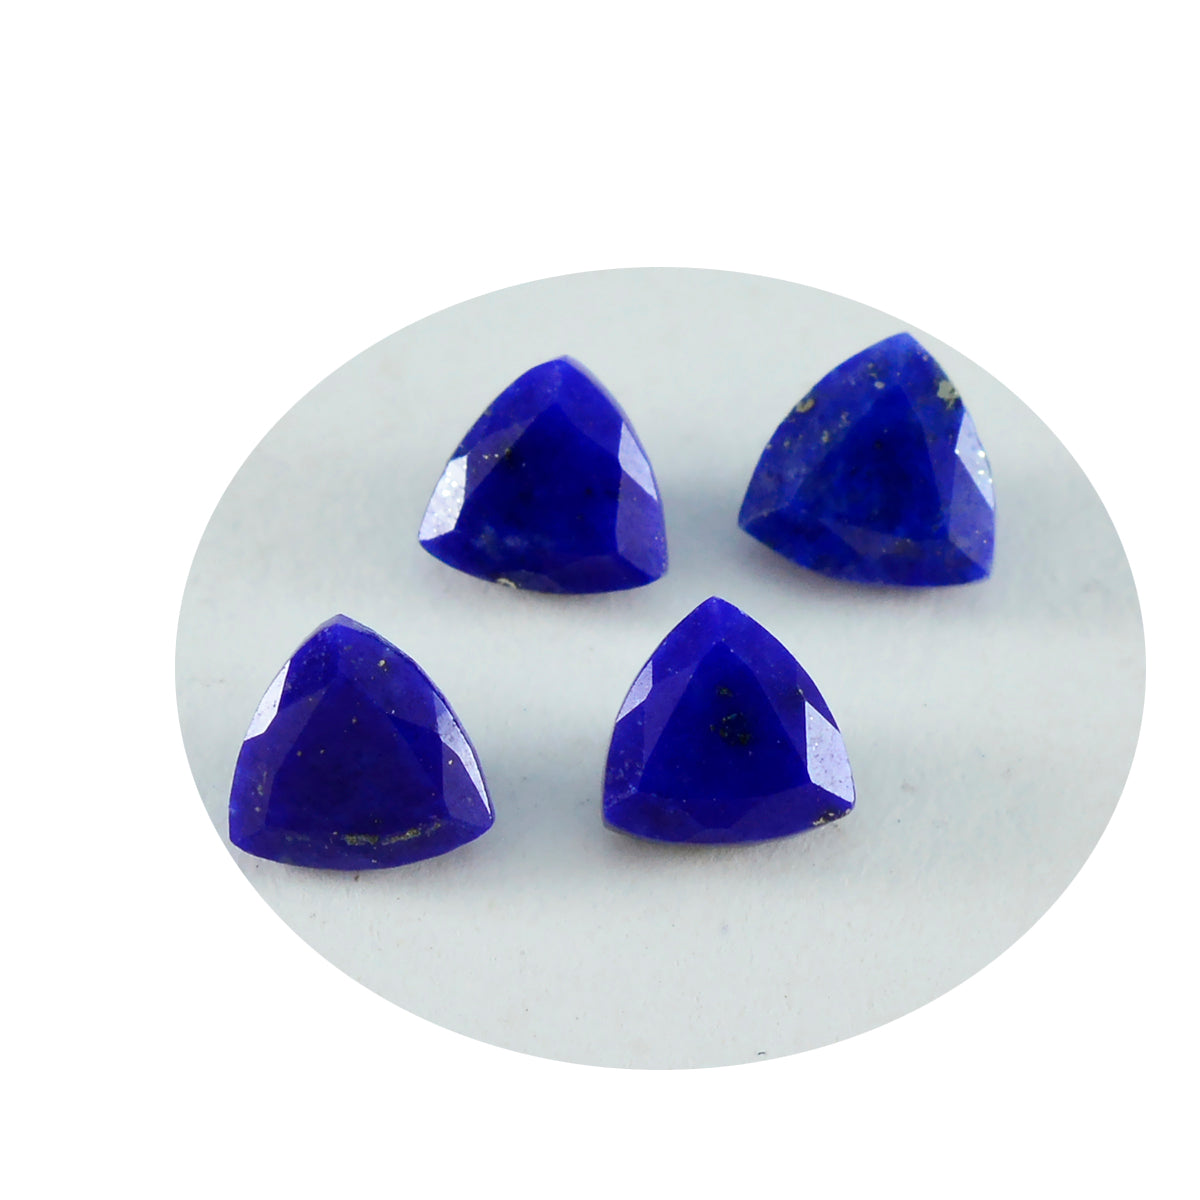 riyogems 1pc lapislazzuli blu naturale sfaccettato 8x8 mm forma trilione pietra sciolta di qualità sorprendente